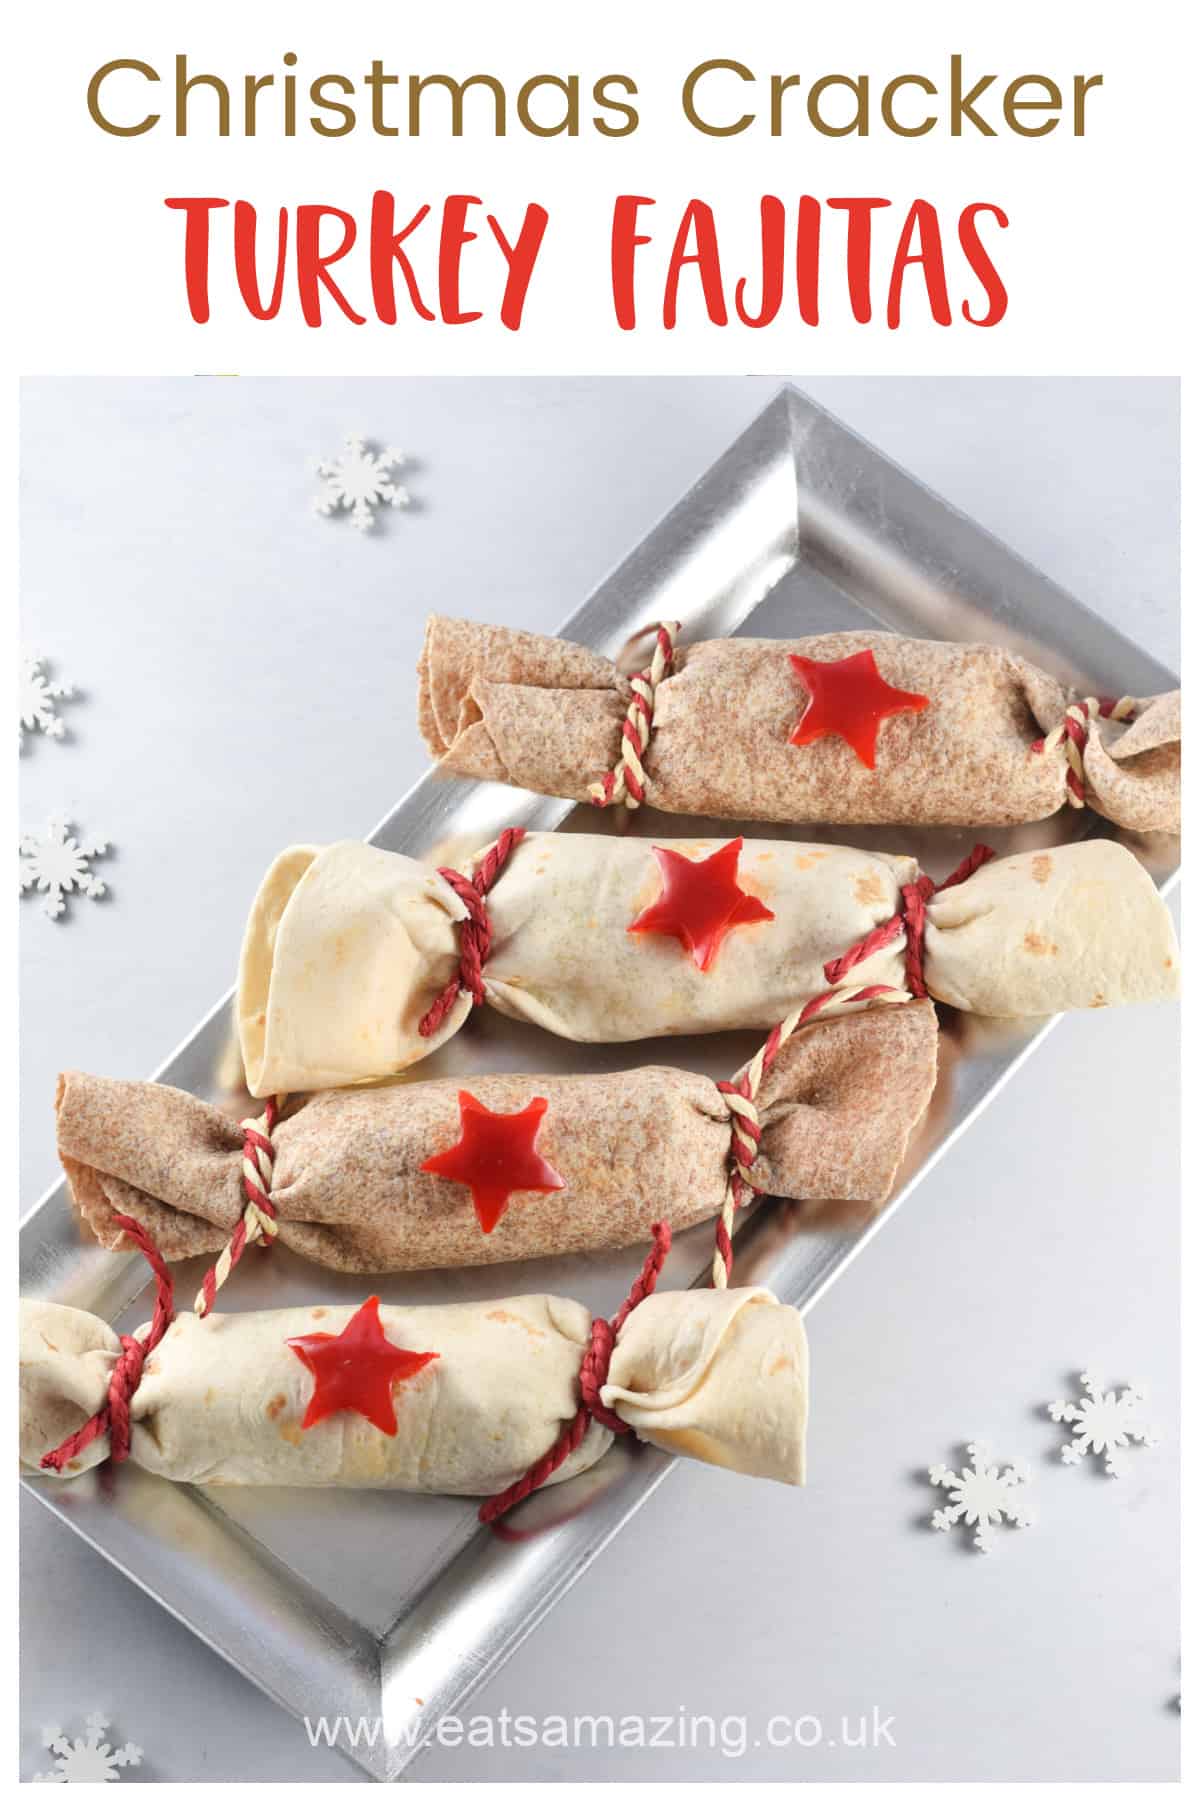 How to make fun turkey fajita Christmas crackers - fun Christmas recipe for Christmas party food and dinner parties